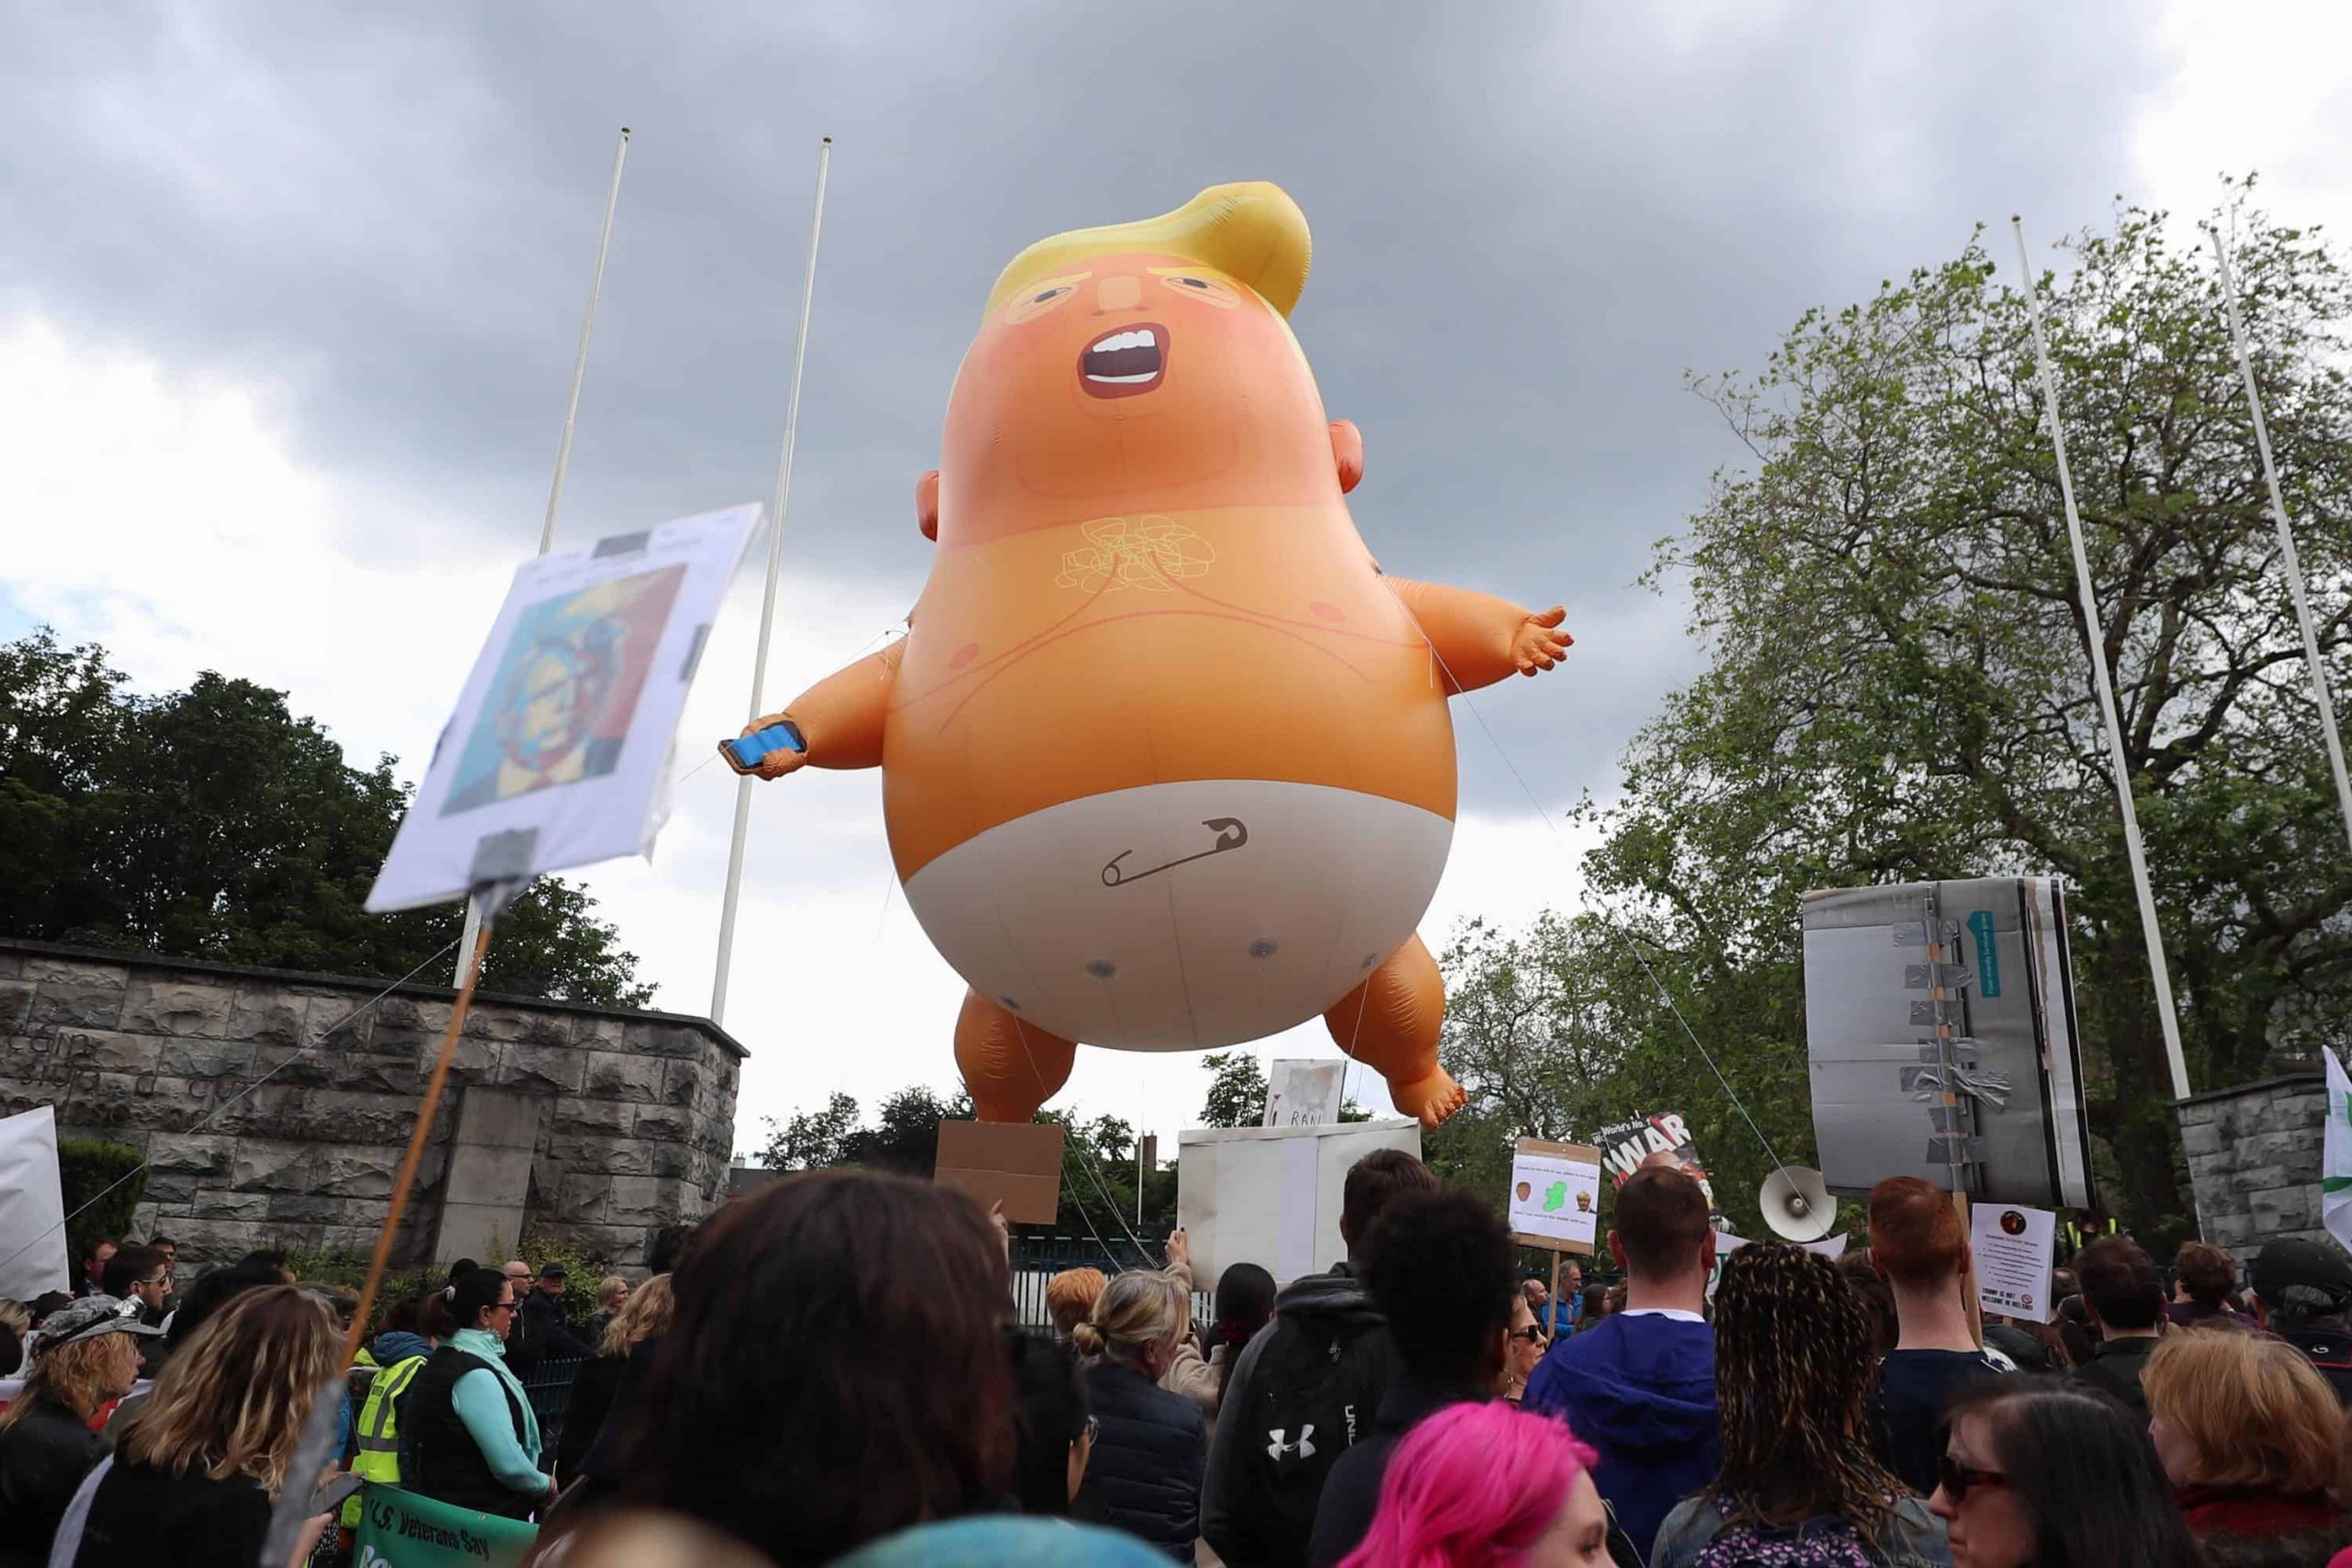 Baby Trump balloon stabbed & deflated at Alabama appearance